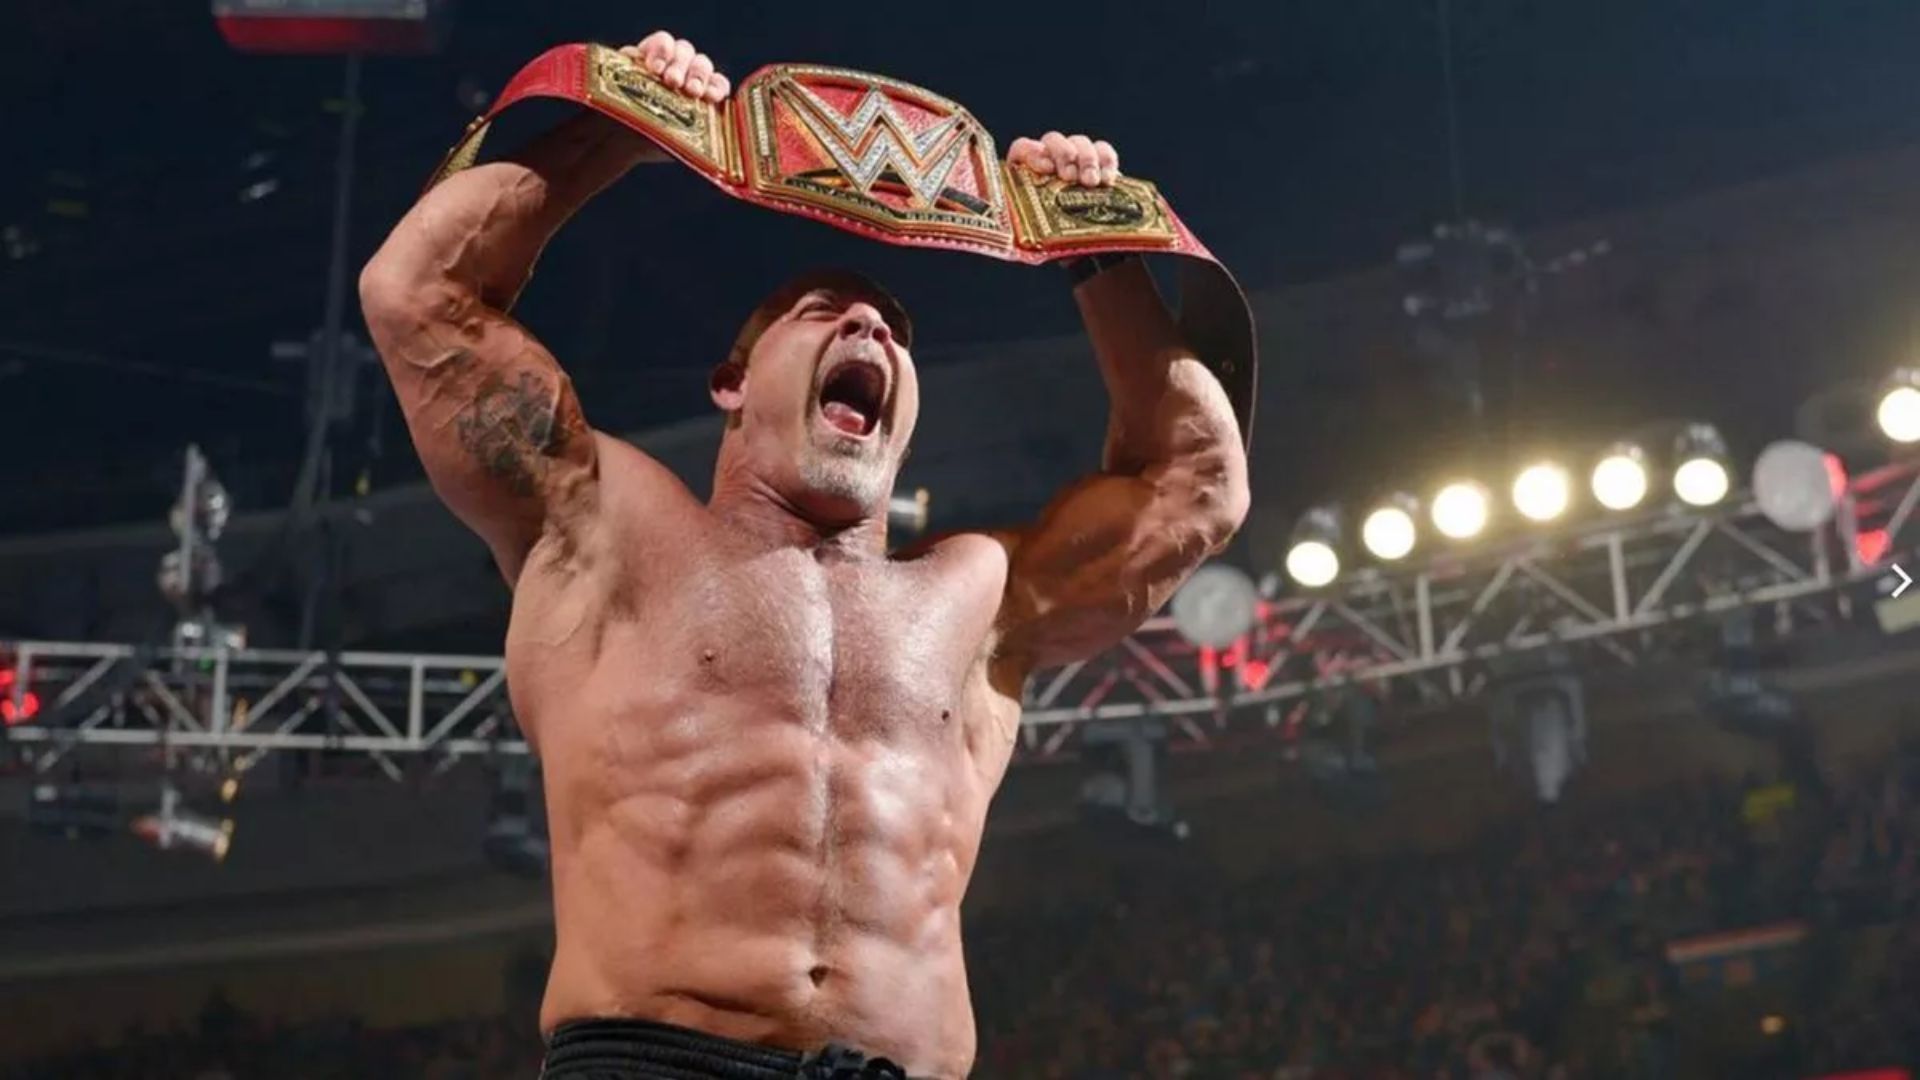 Goldberg is a two-time WWE Universal Champion